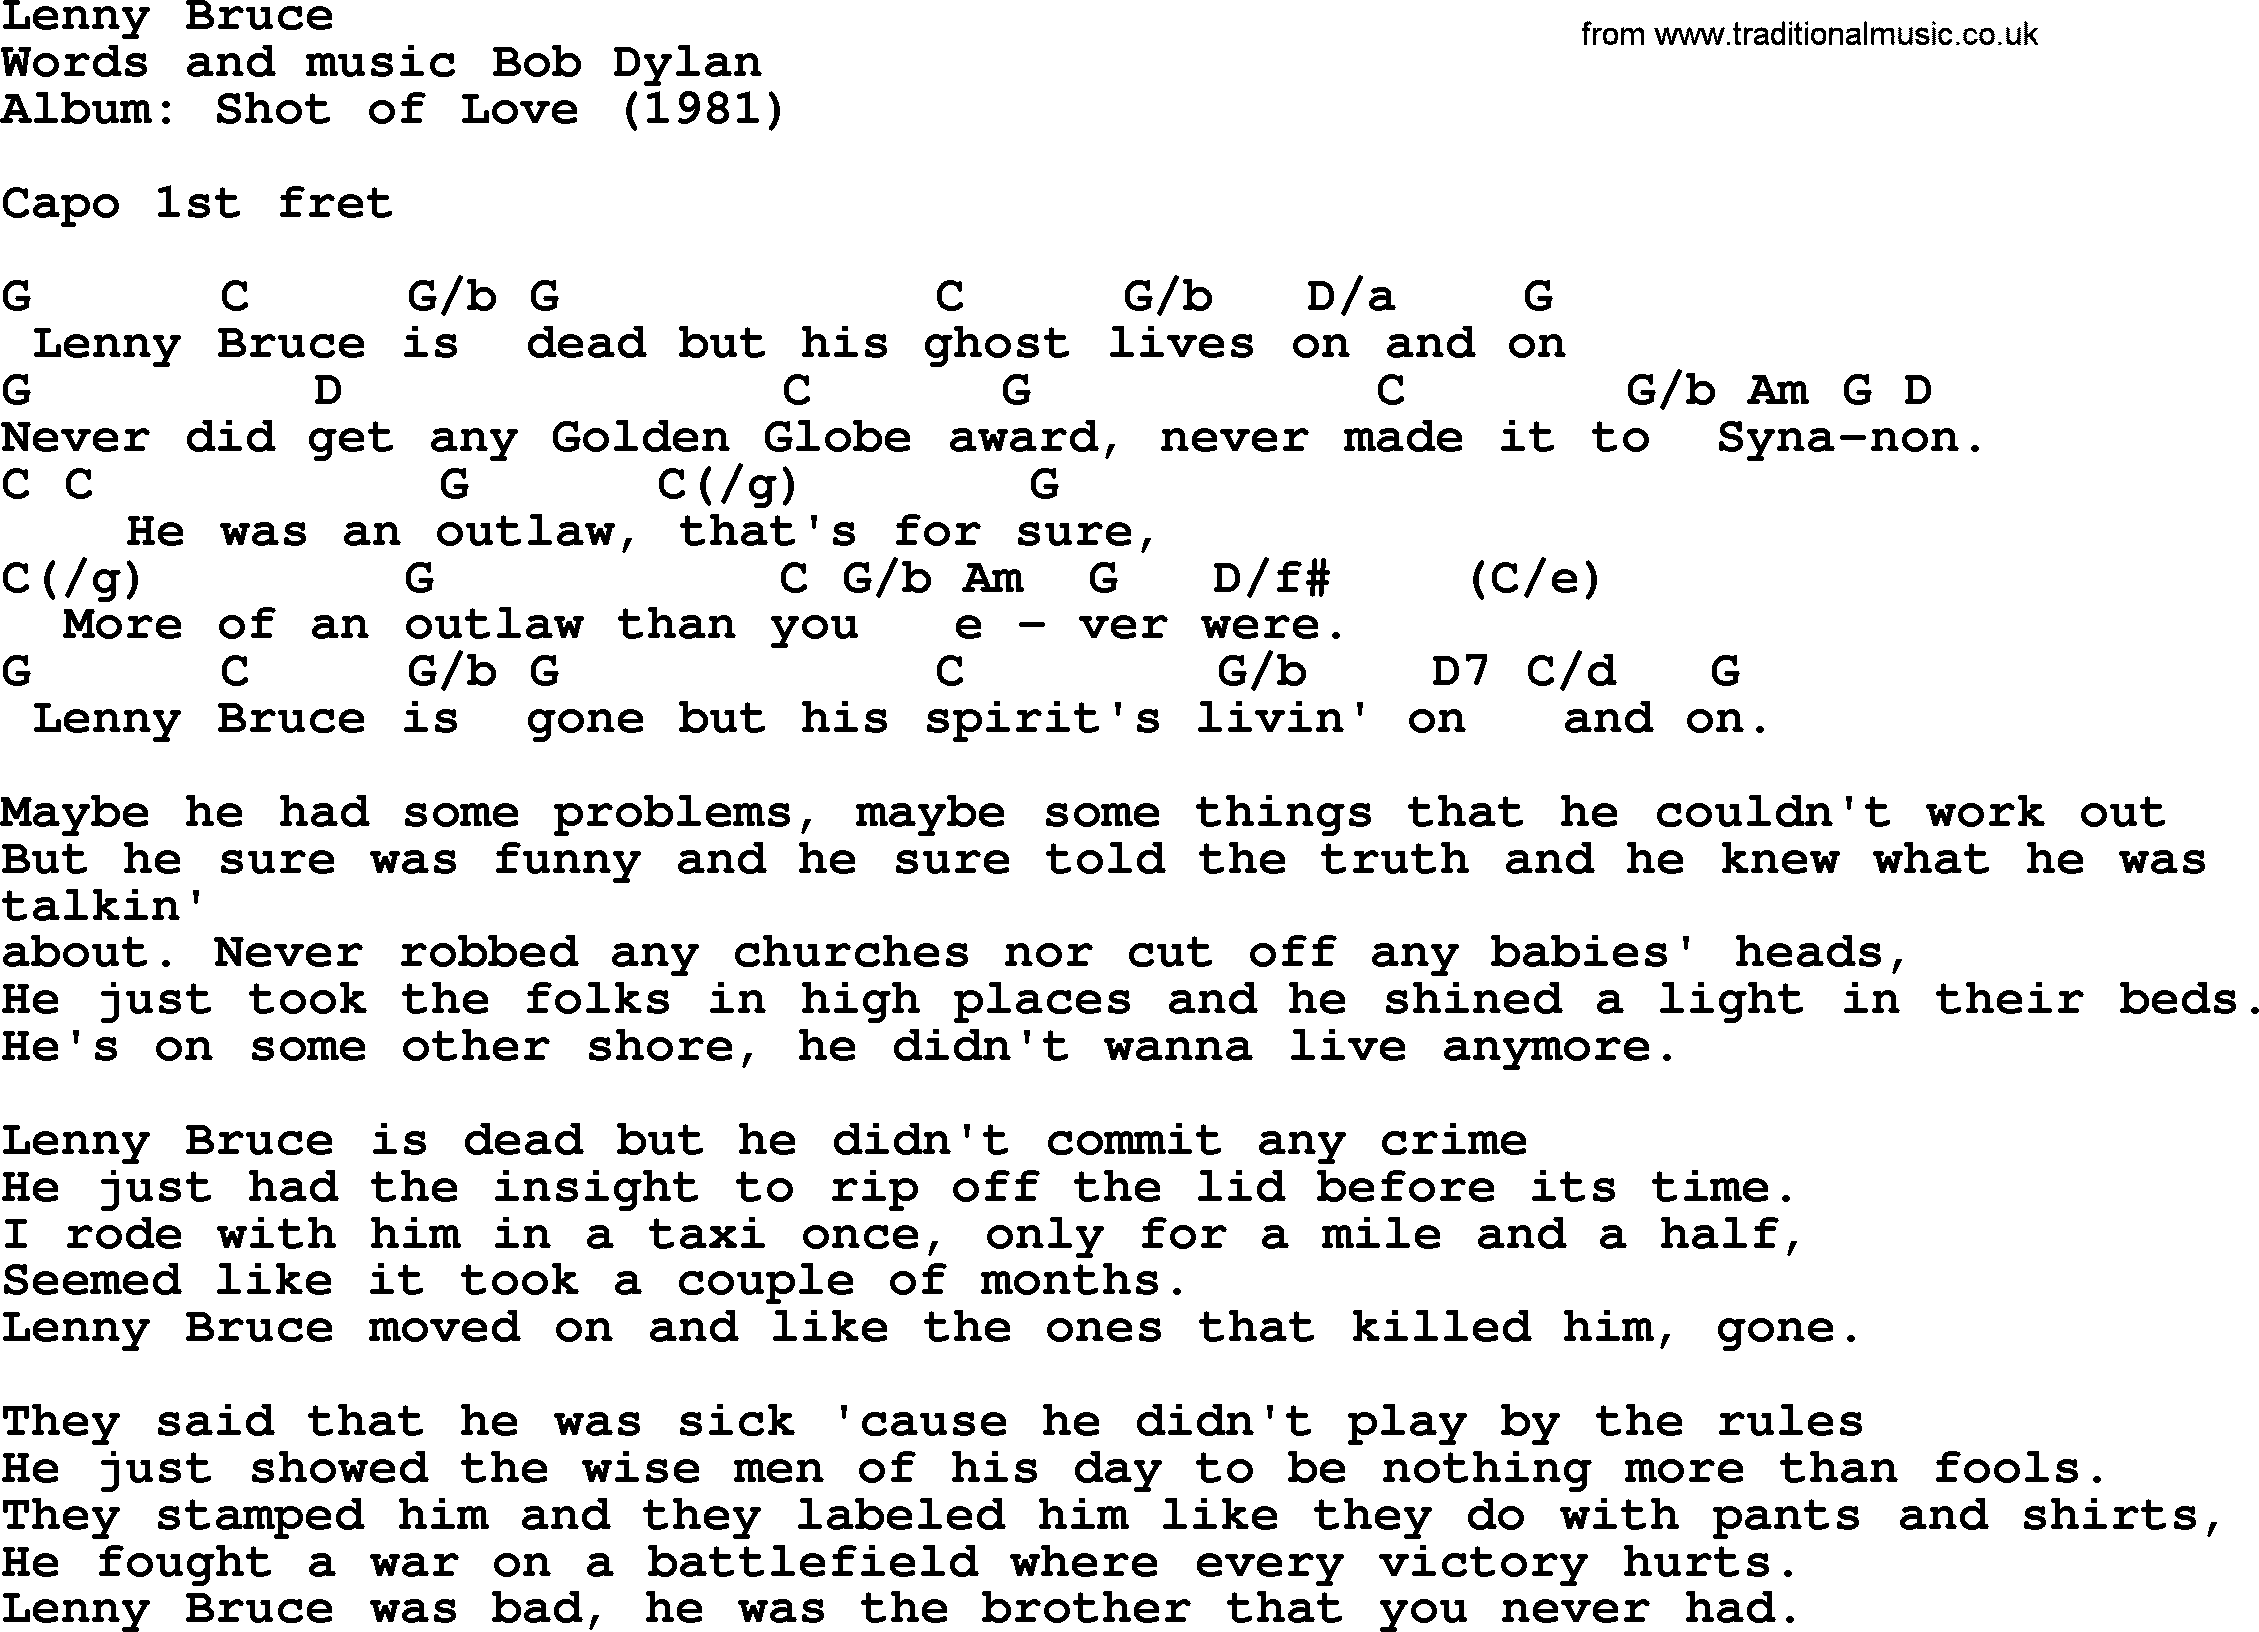 Bob Dylan song, lyrics with chords - Lenny Bruce